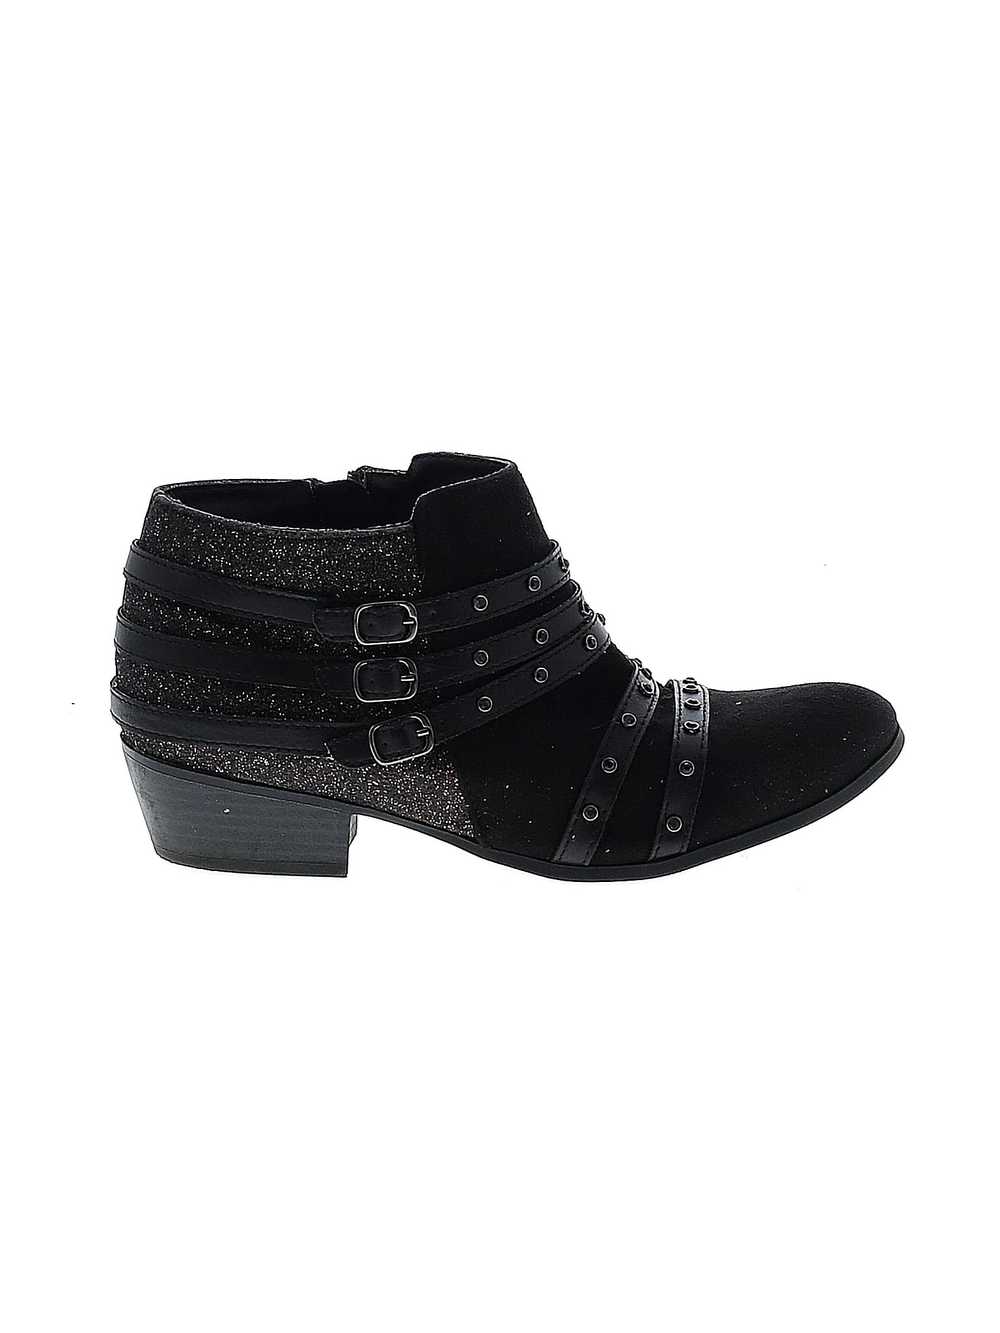 Jessica Simpson Women Black Ankle Boots 5 - image 1